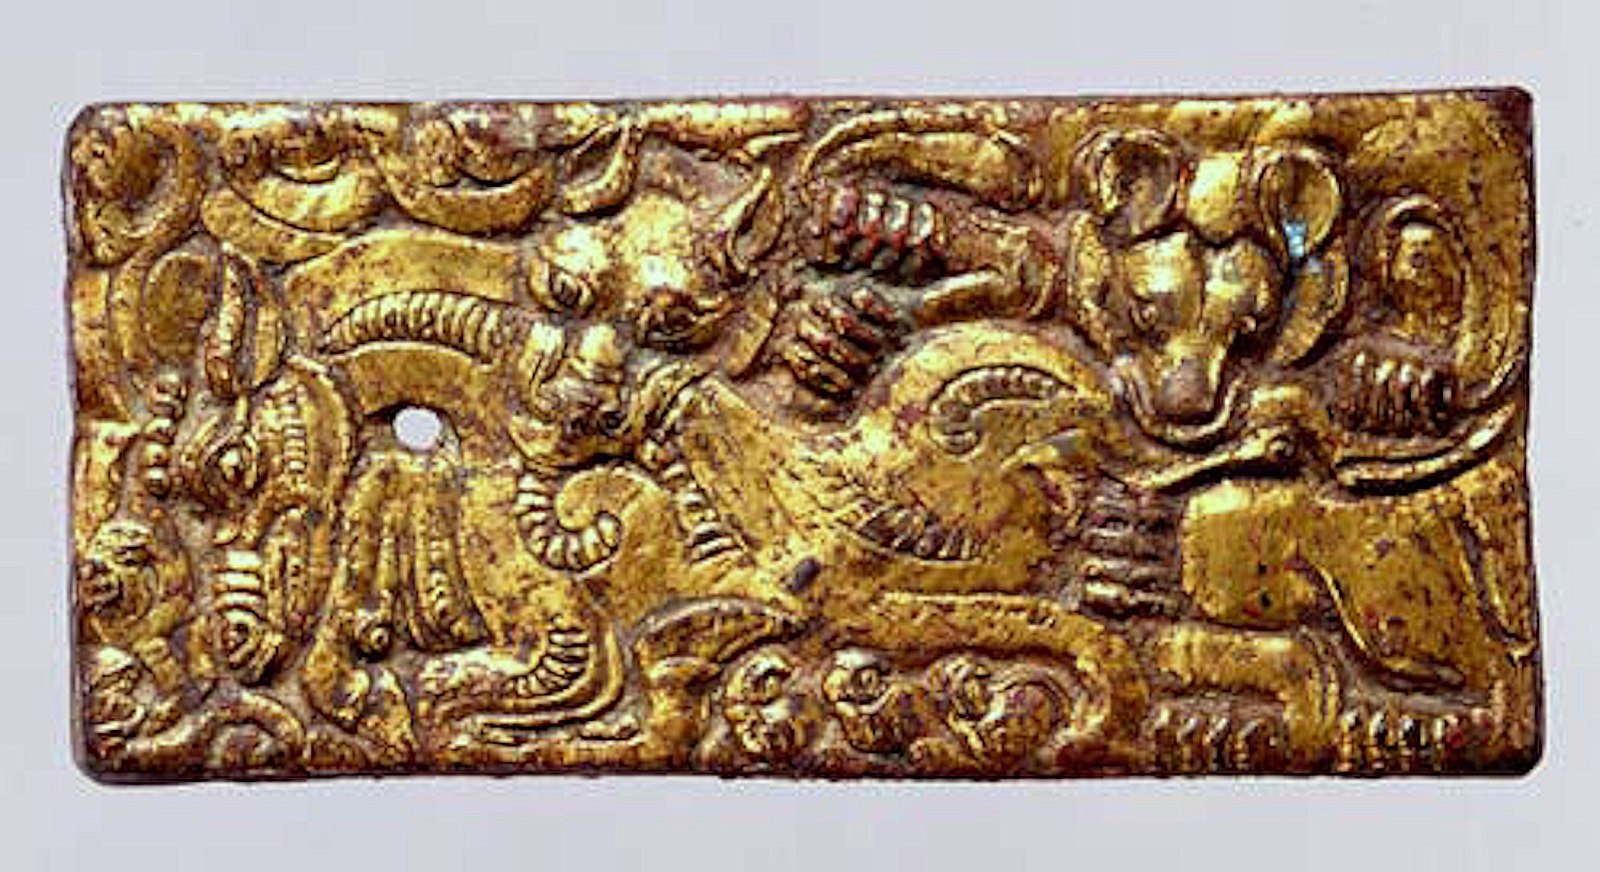 Belt_buckle_with_animal_combat_scene,_2nd-1st_century_BCE,_North_China.jpg